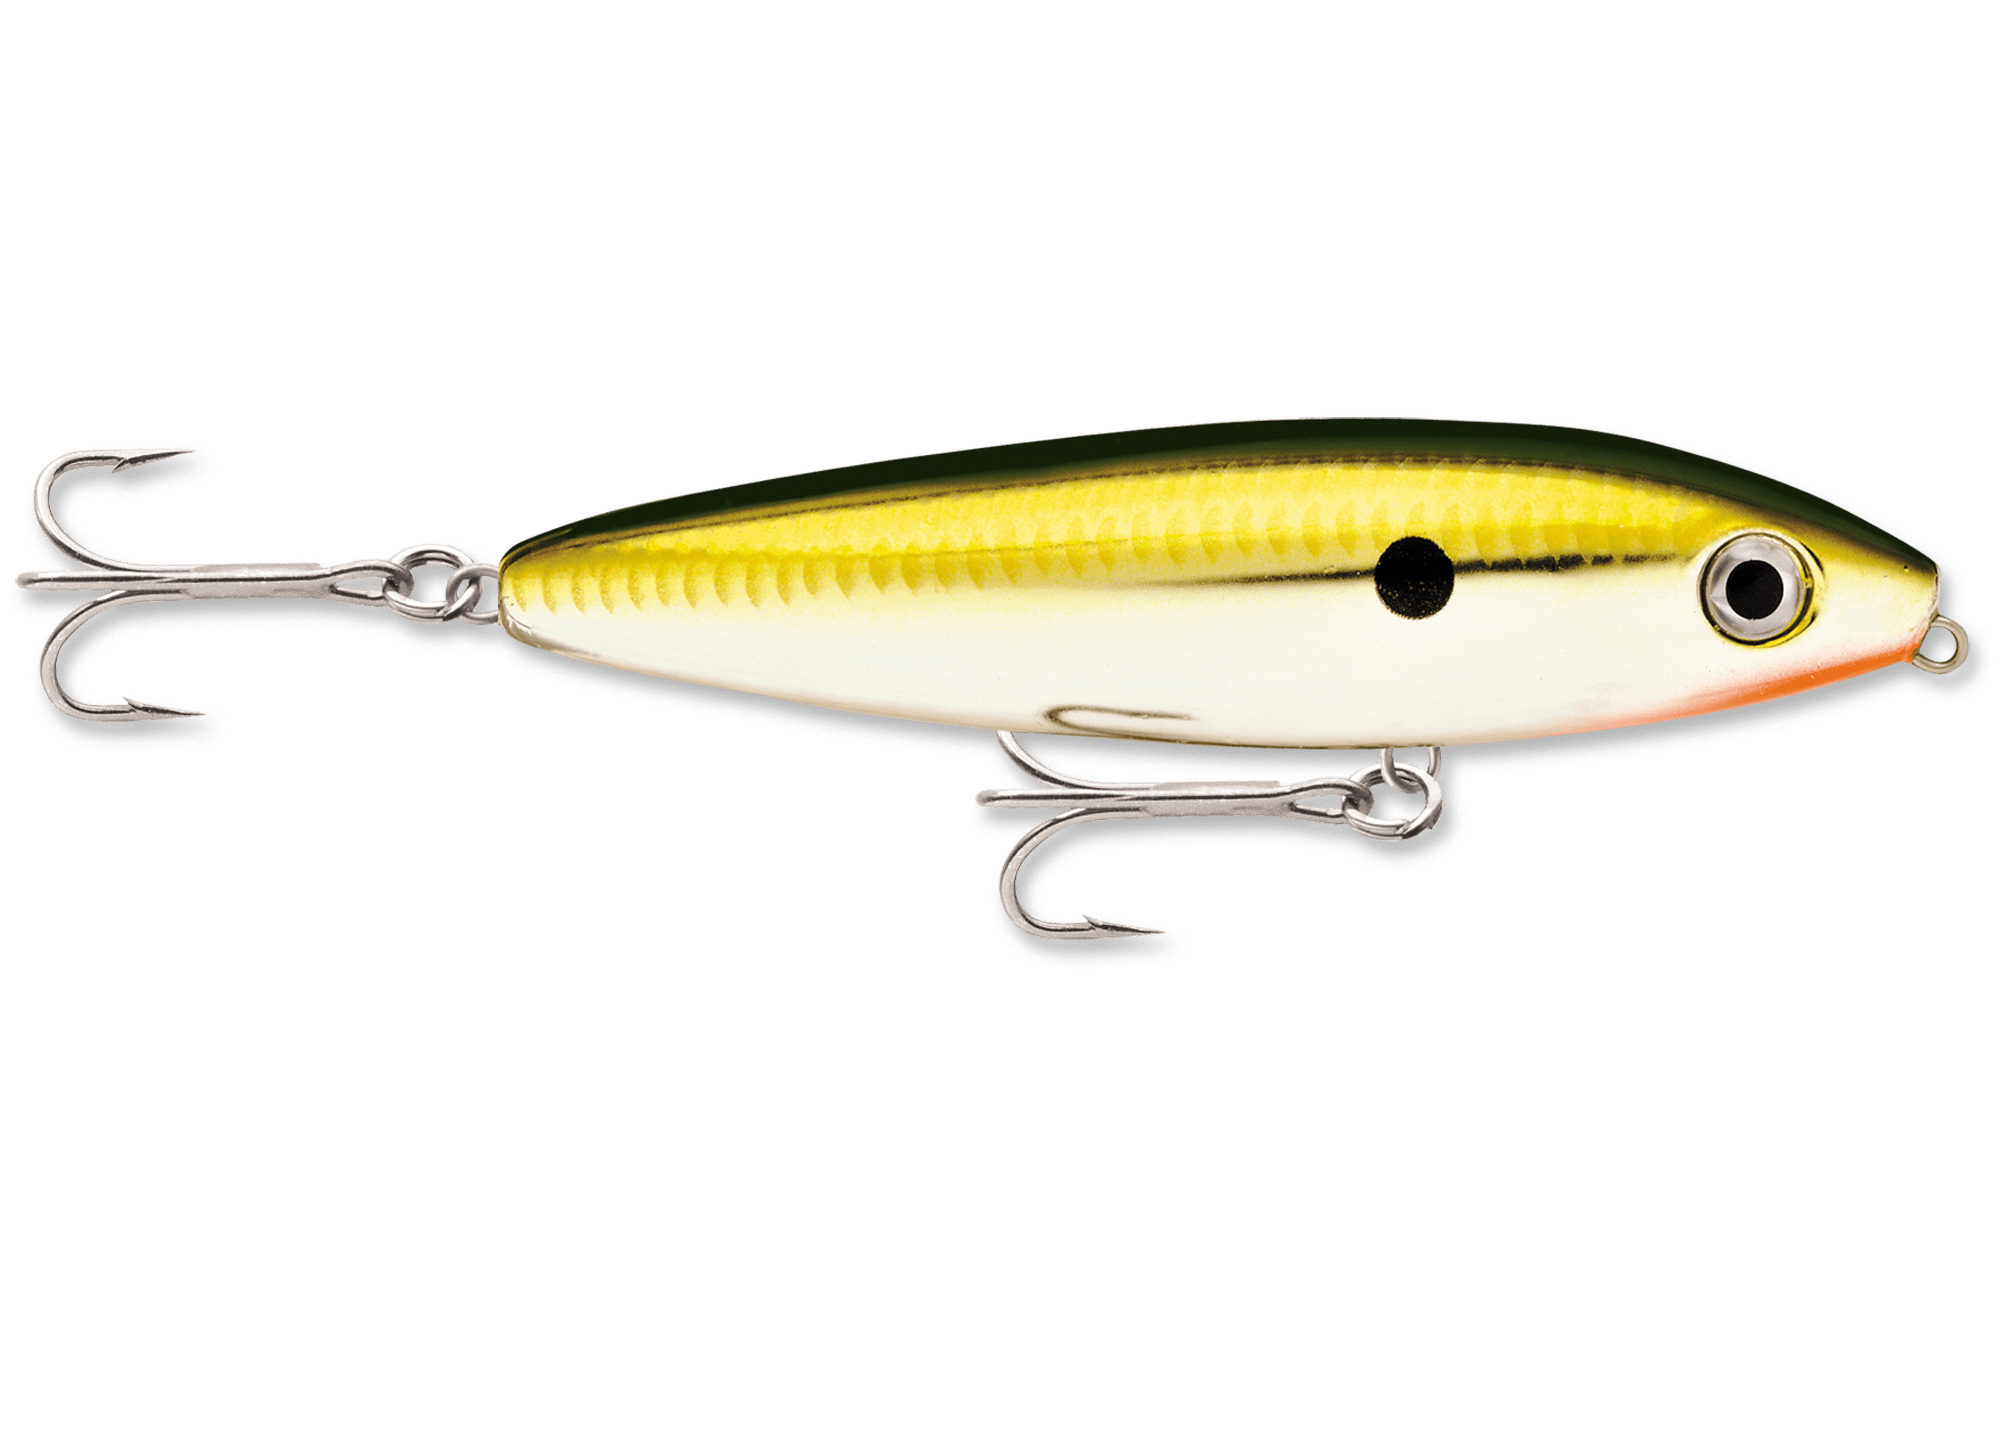  Rapala Skitter Pop 09 Fishing lure, 3.5-Inch, Gold